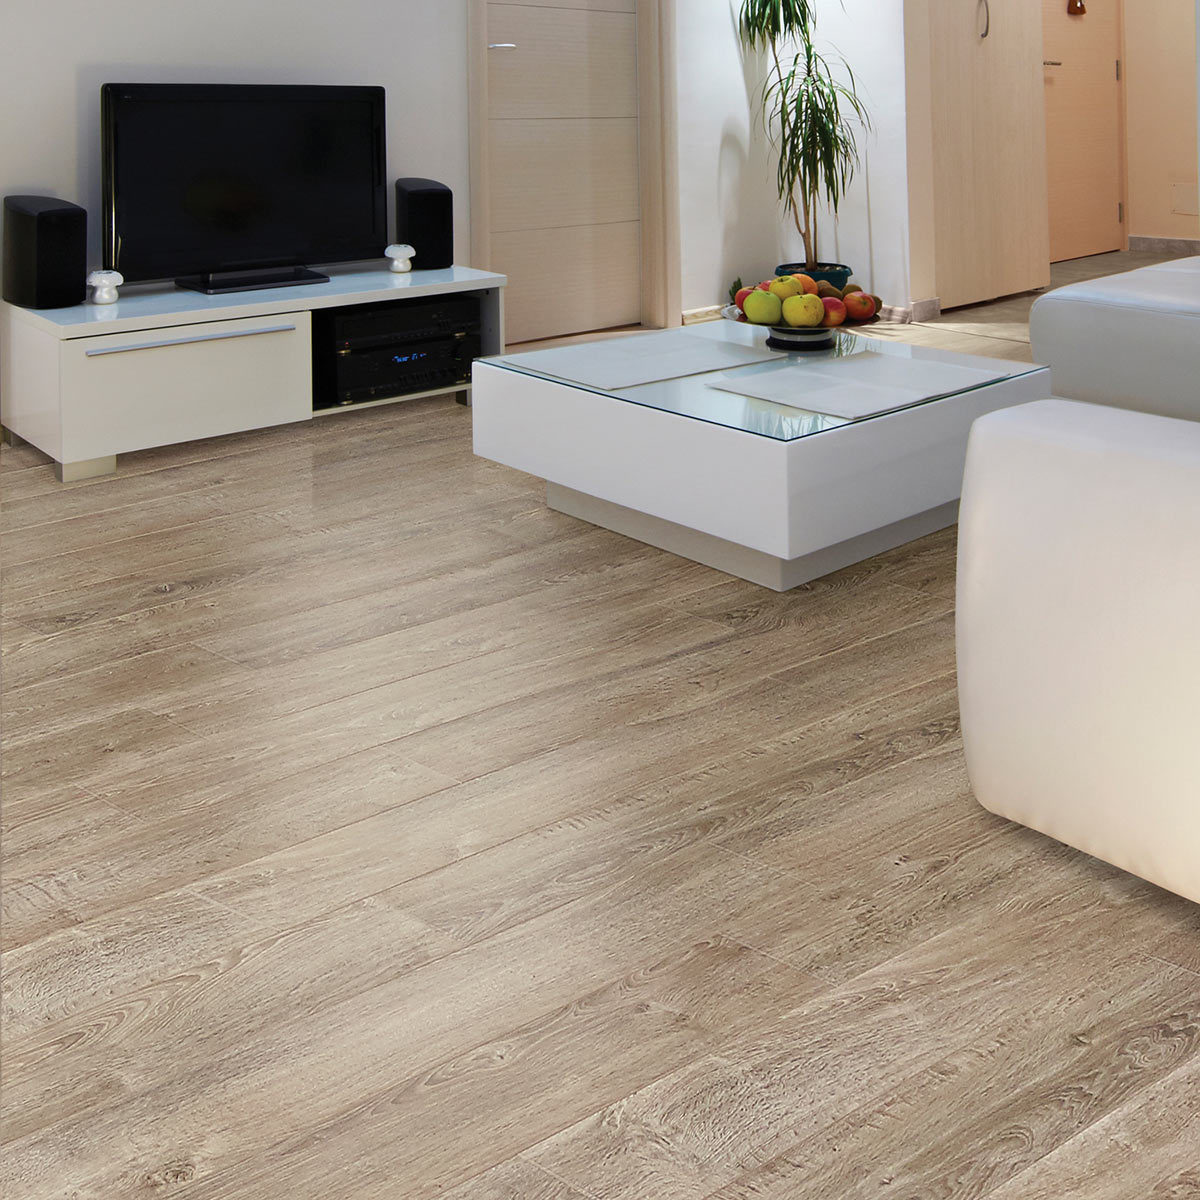 Golden Select Providence Grey Laminate Flooring With Foam Underlay 1 16 M Per Pack Costco Uk